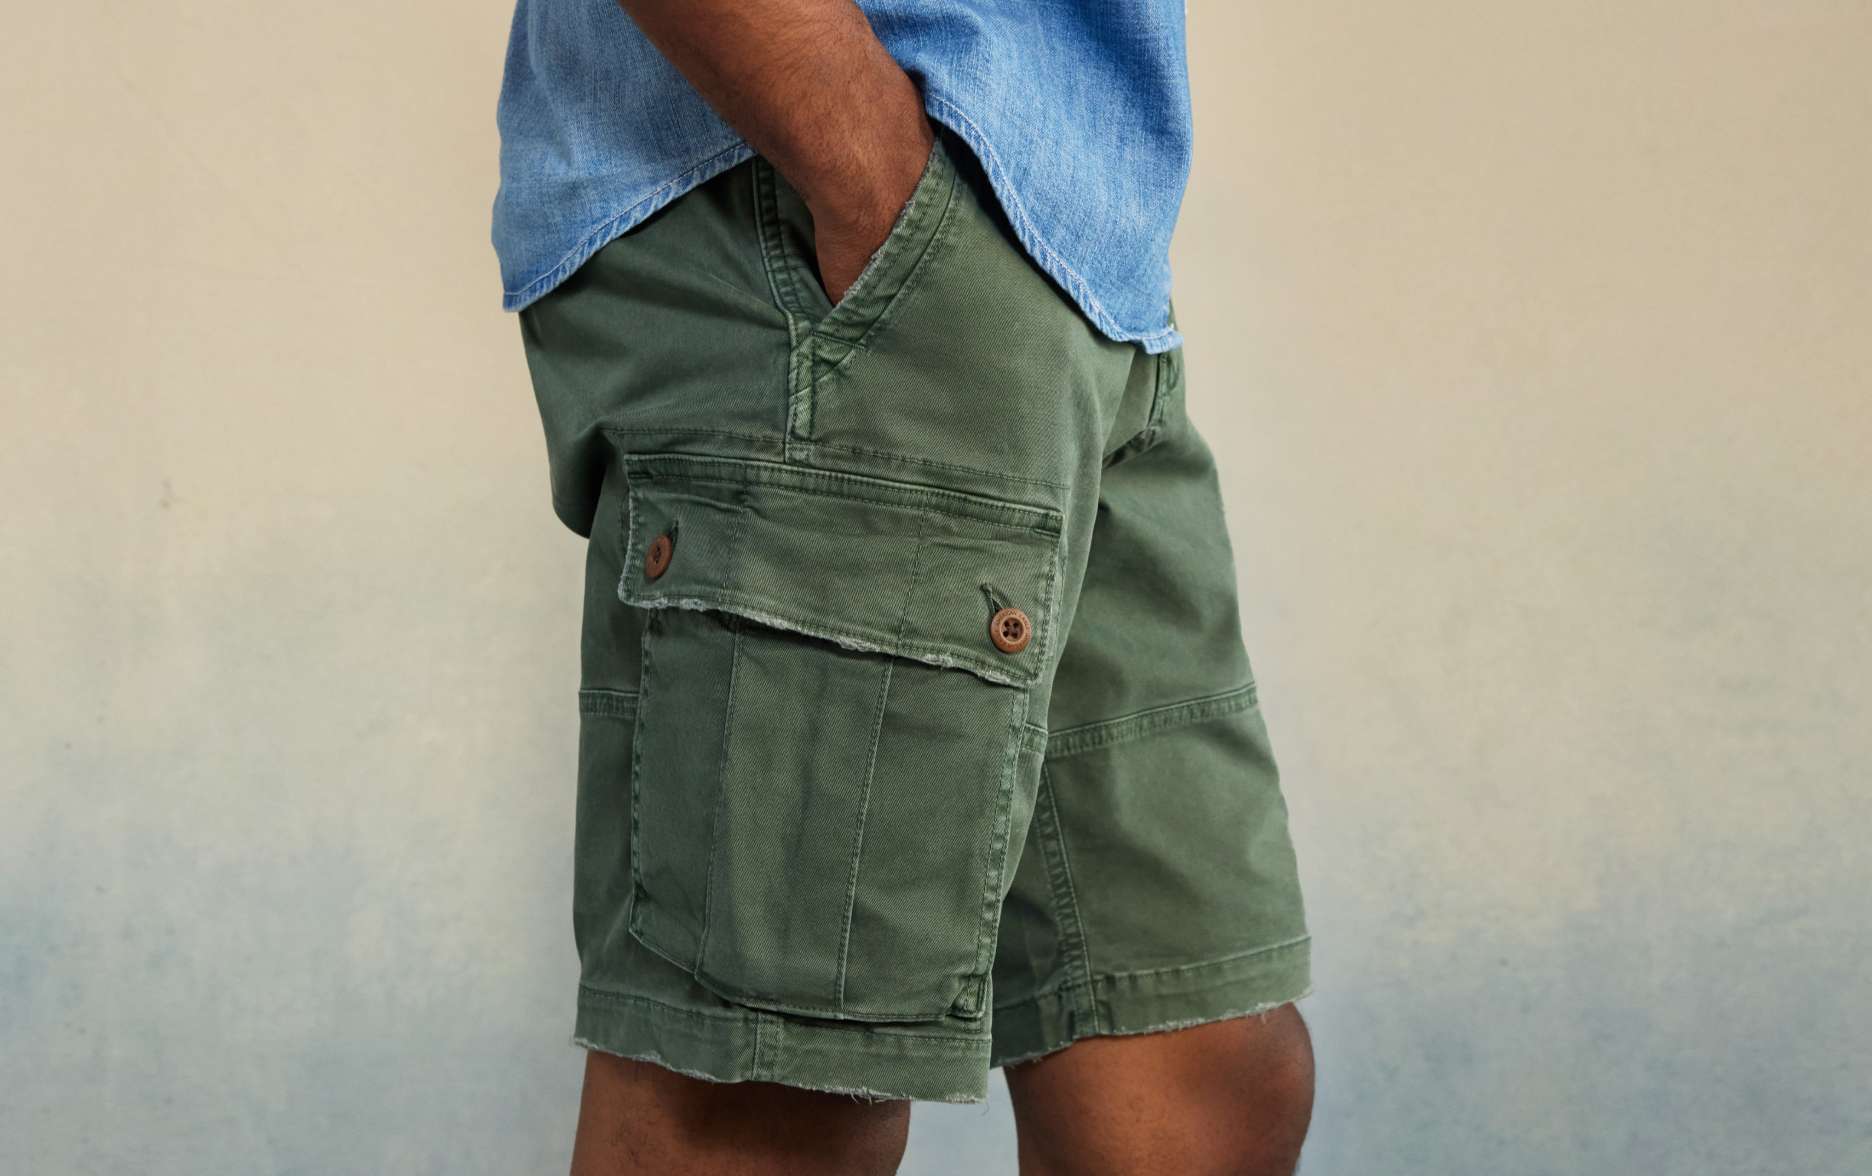 Men's Cargo Shorts: Classic & Camo